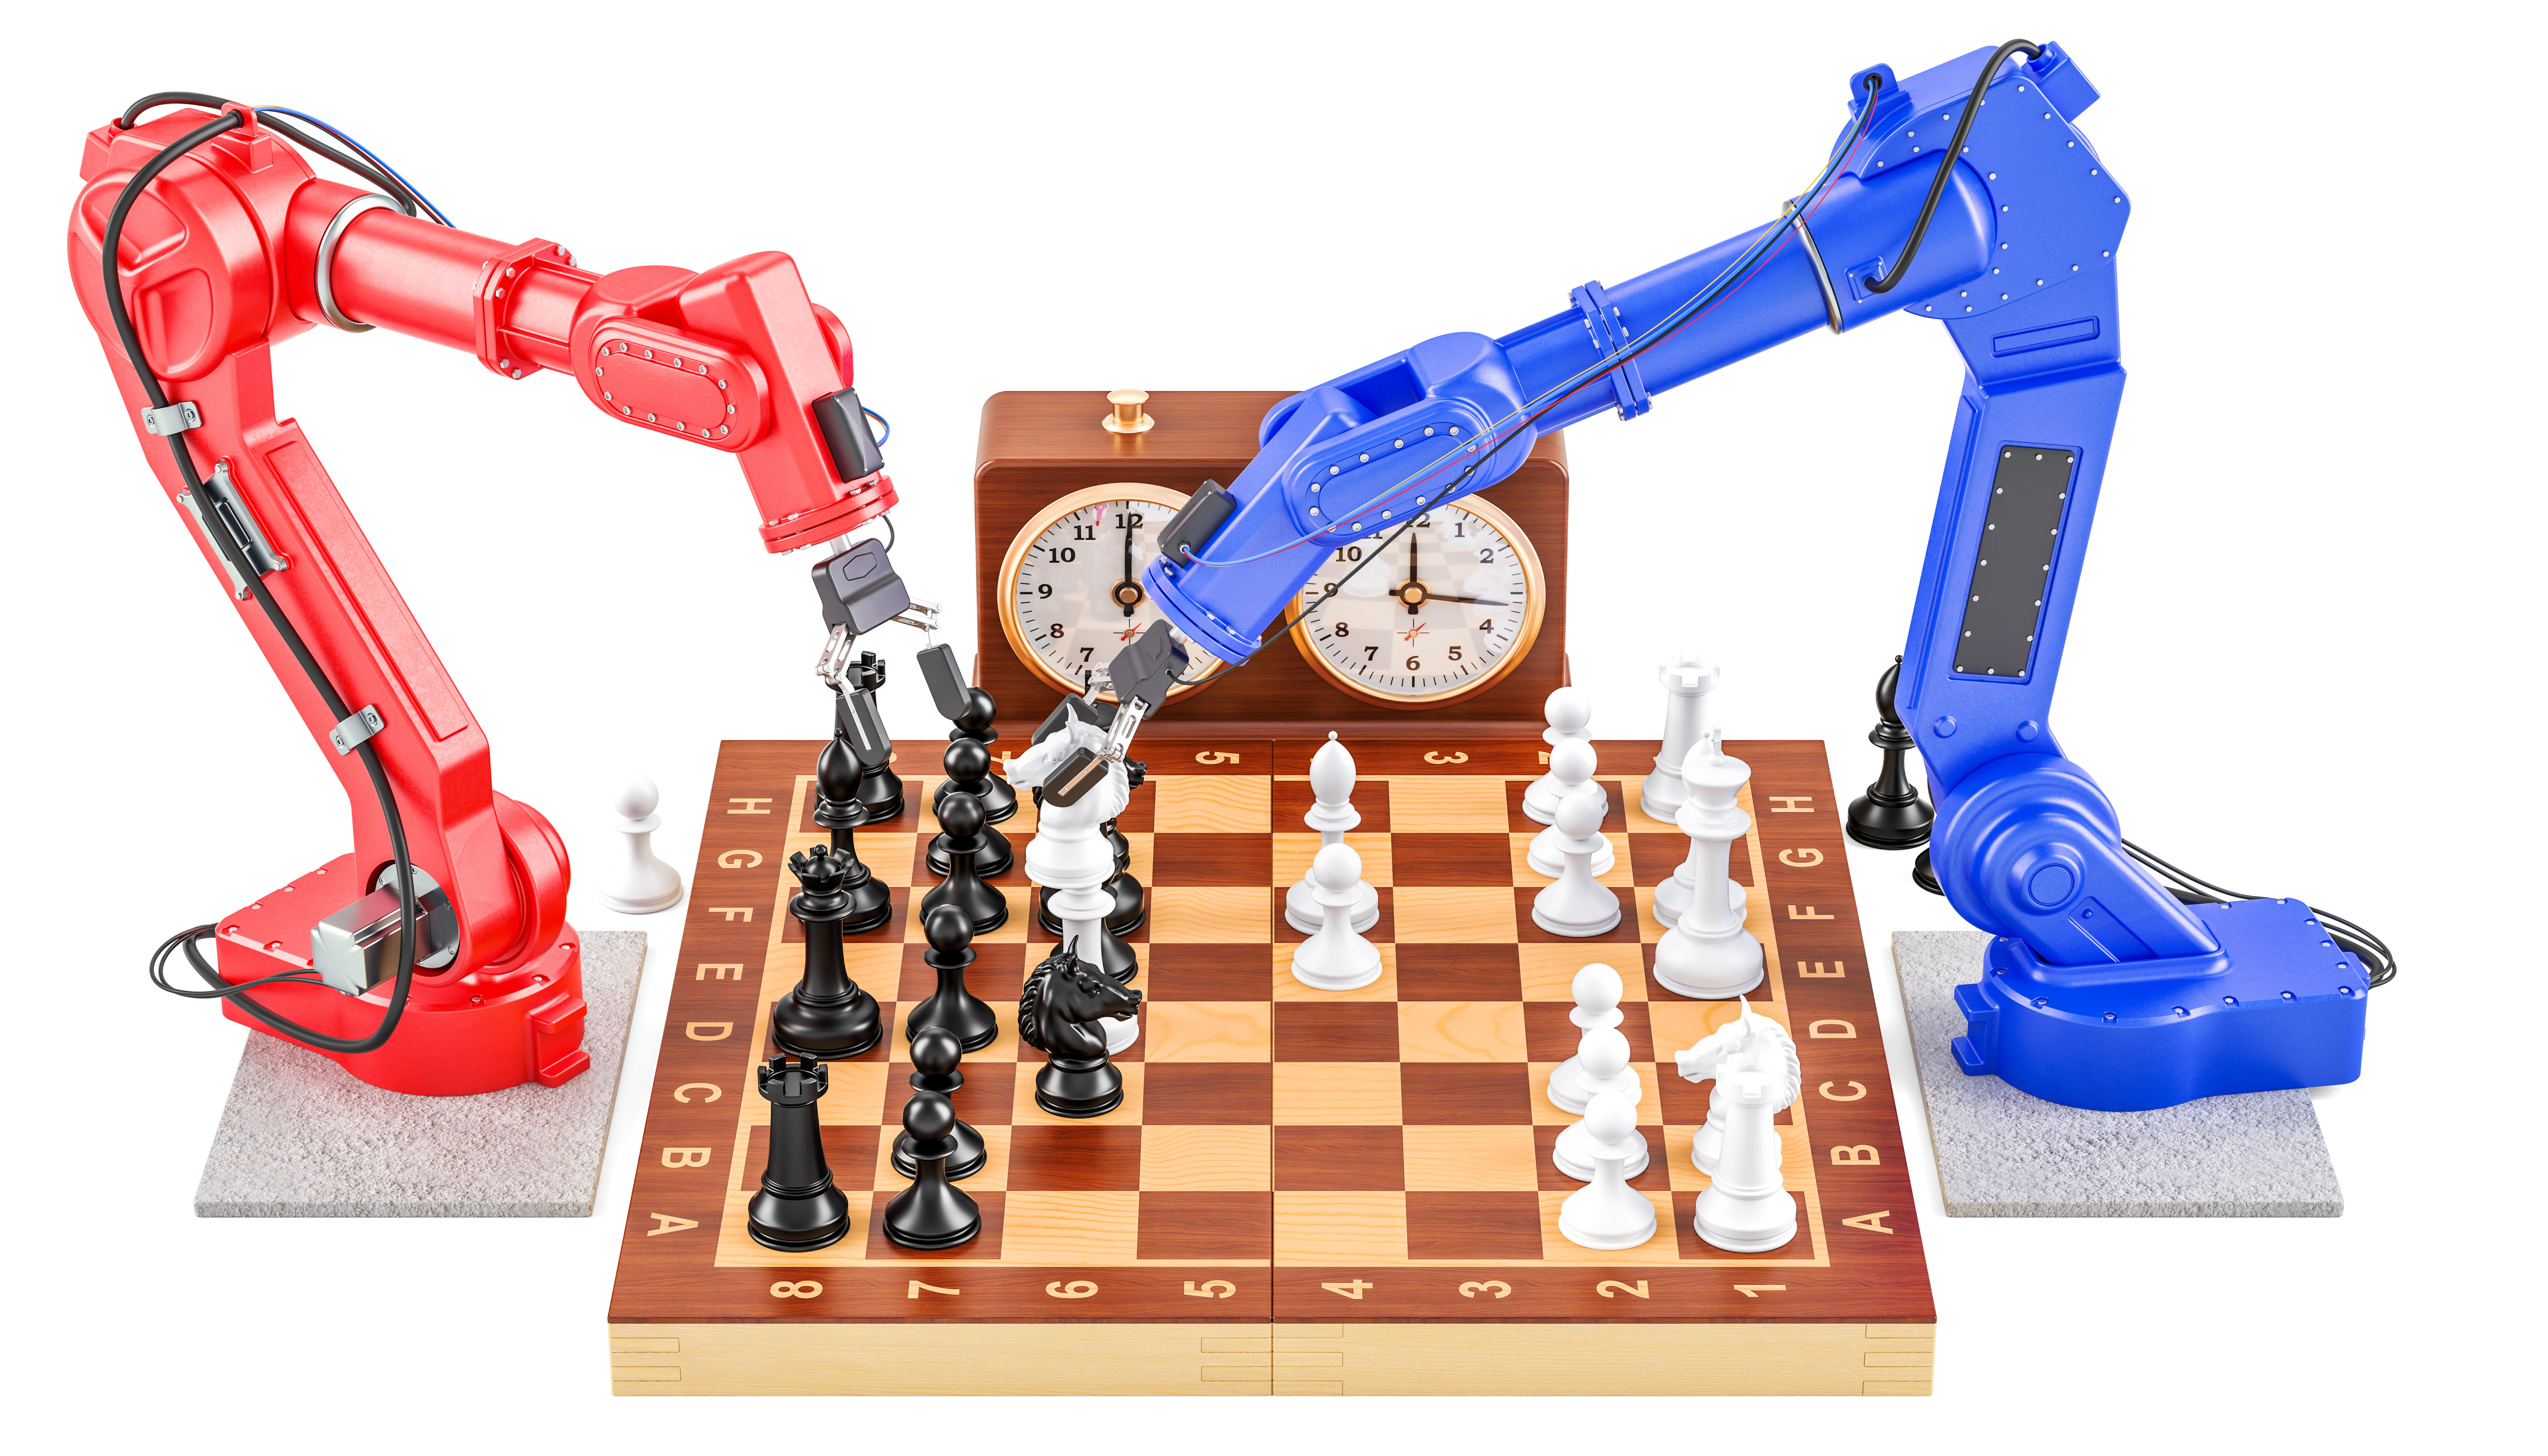 Robots playing chess